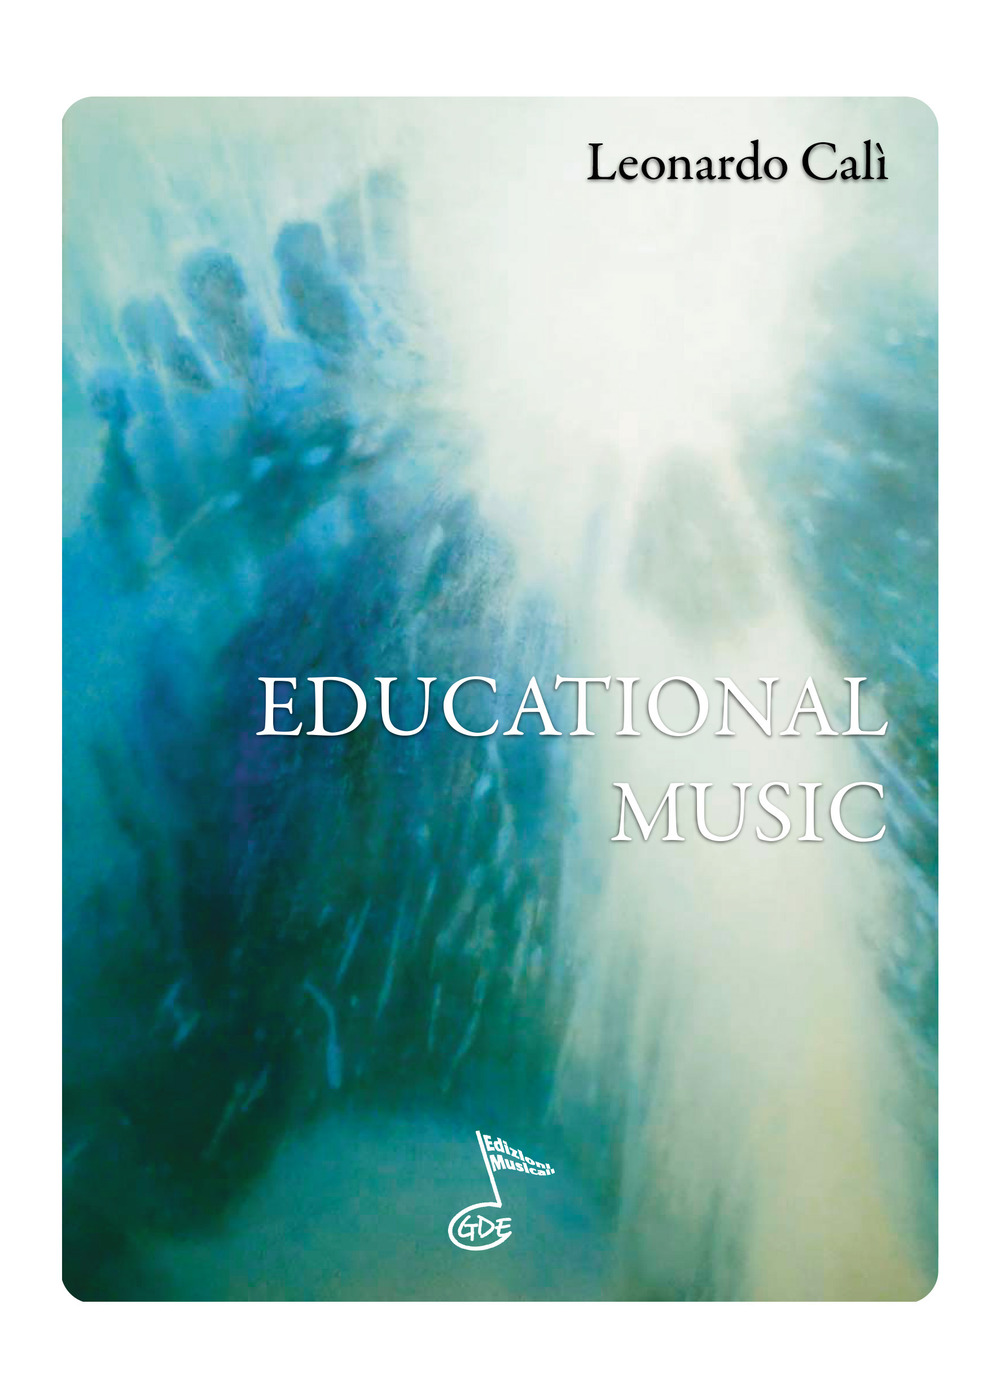 Educational music